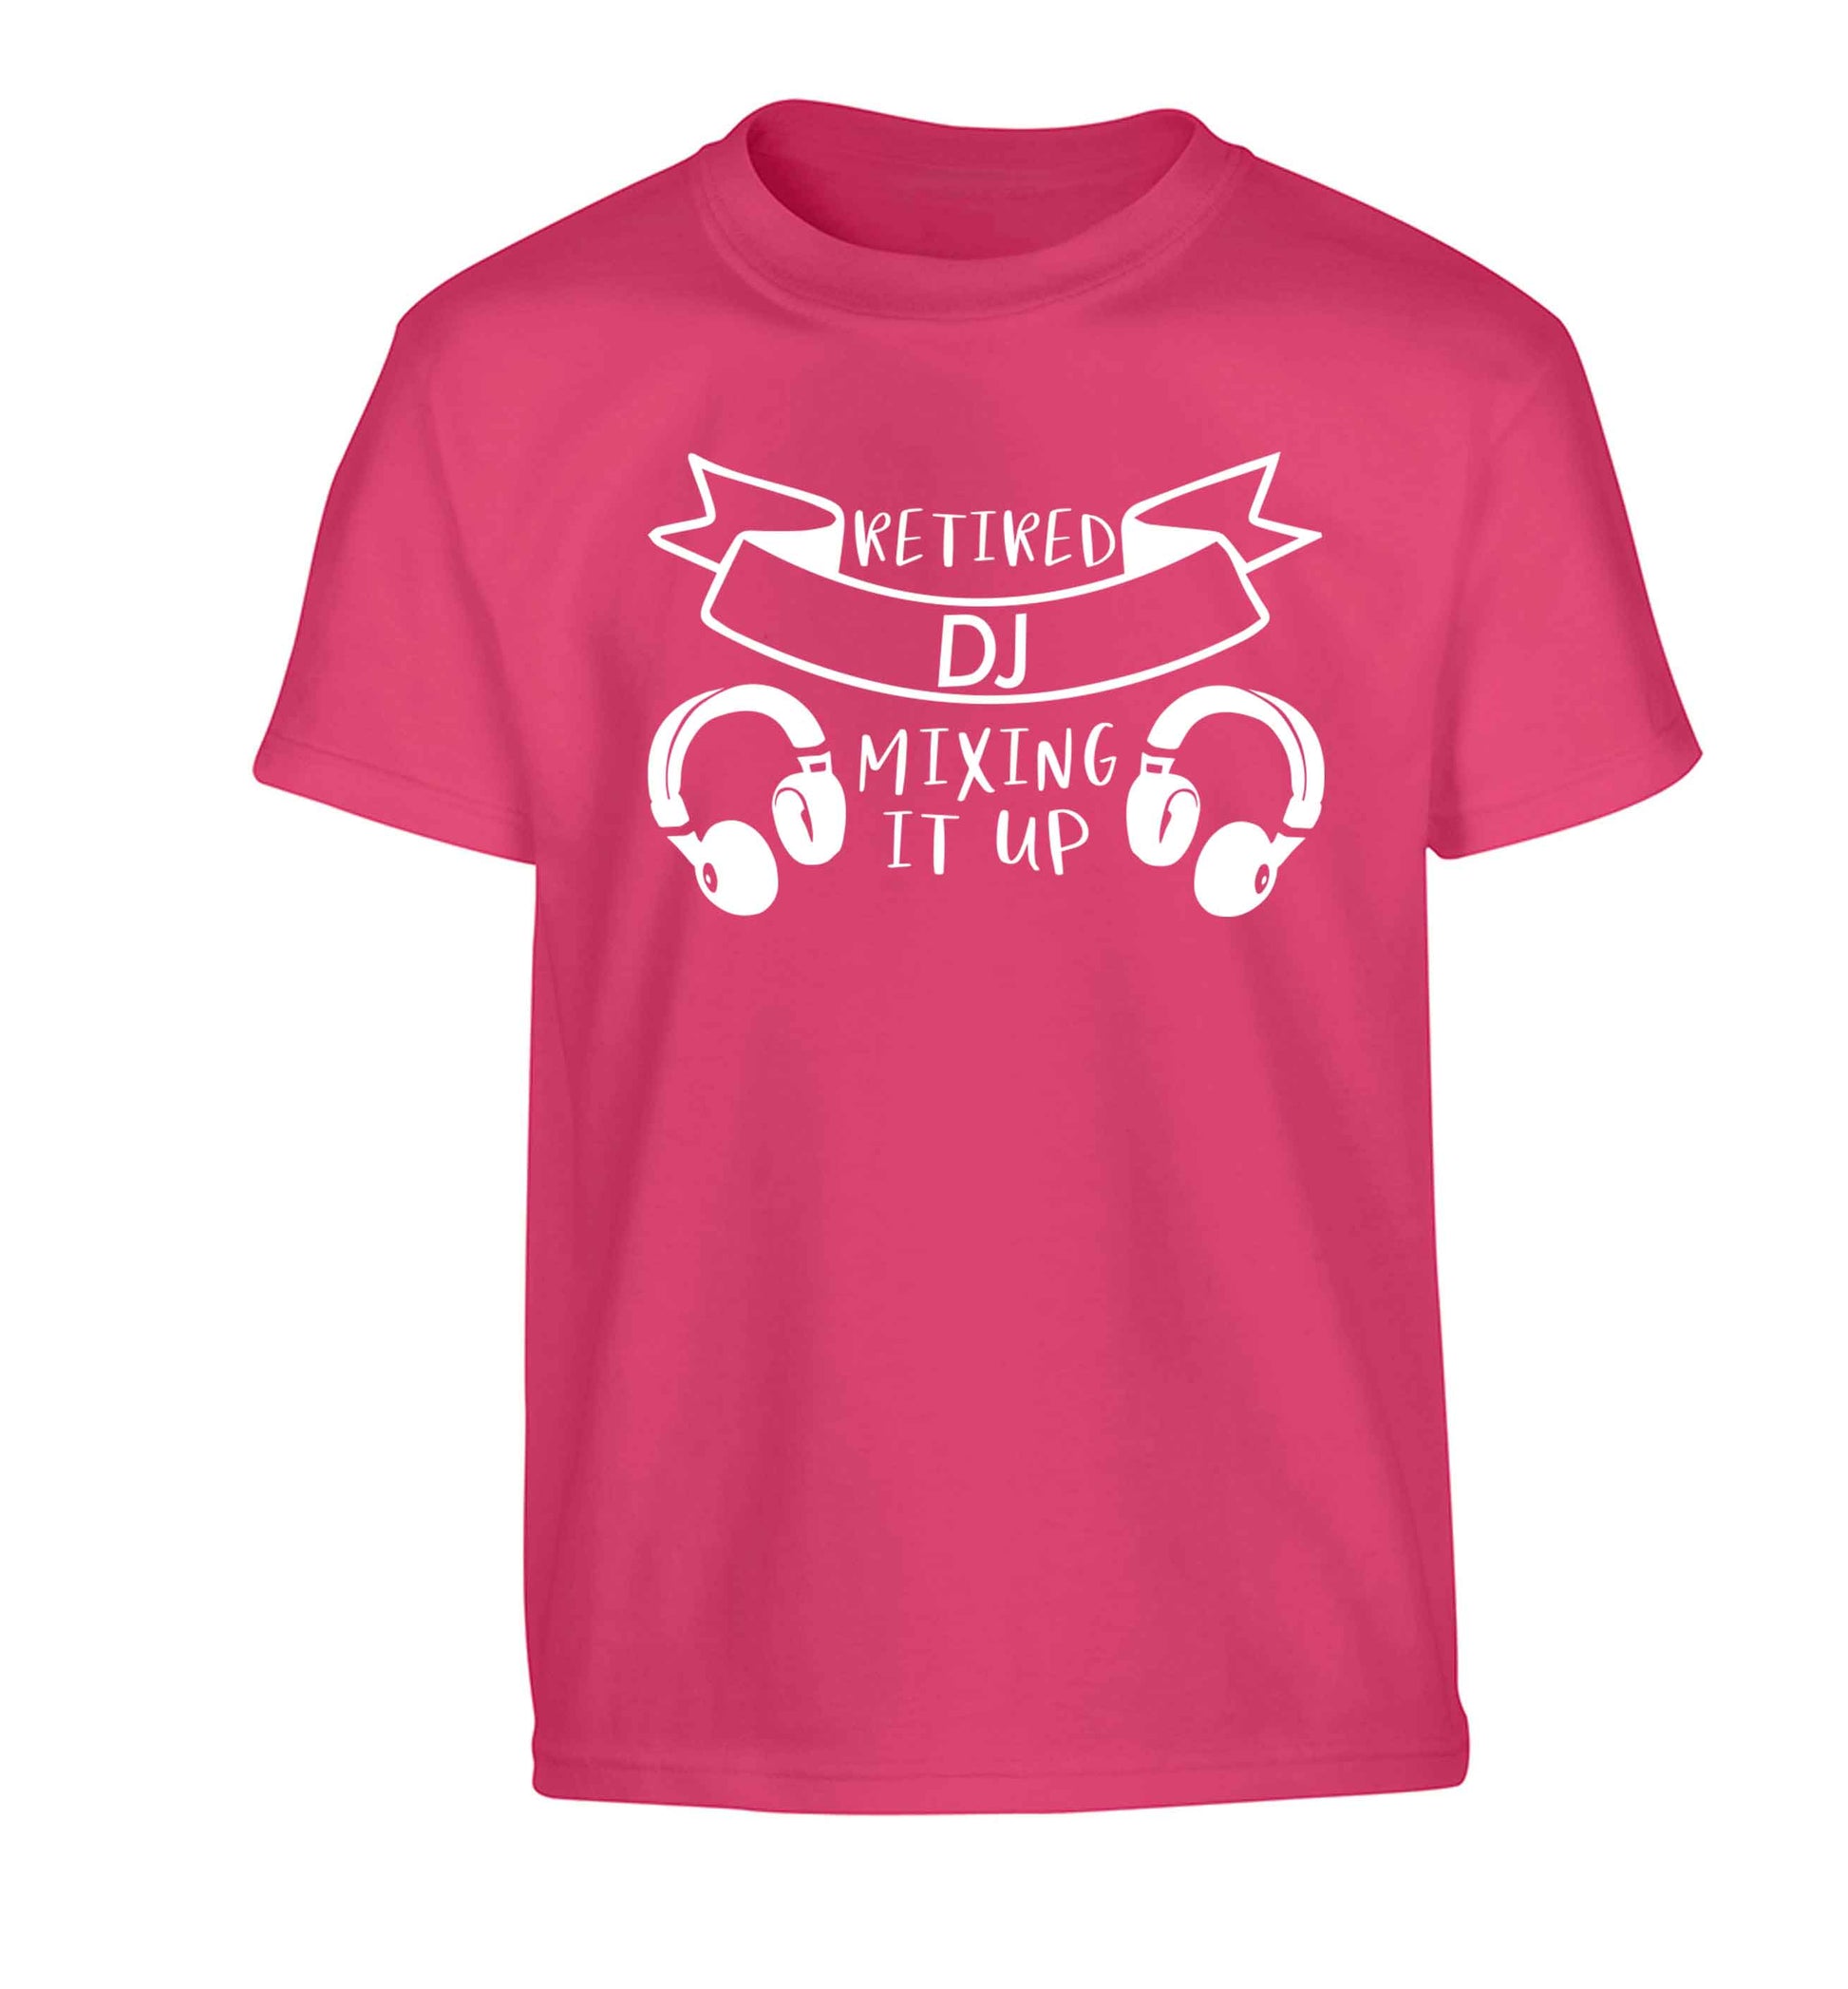 Retired DJ mixing it up Children's pink Tshirt 12-13 Years